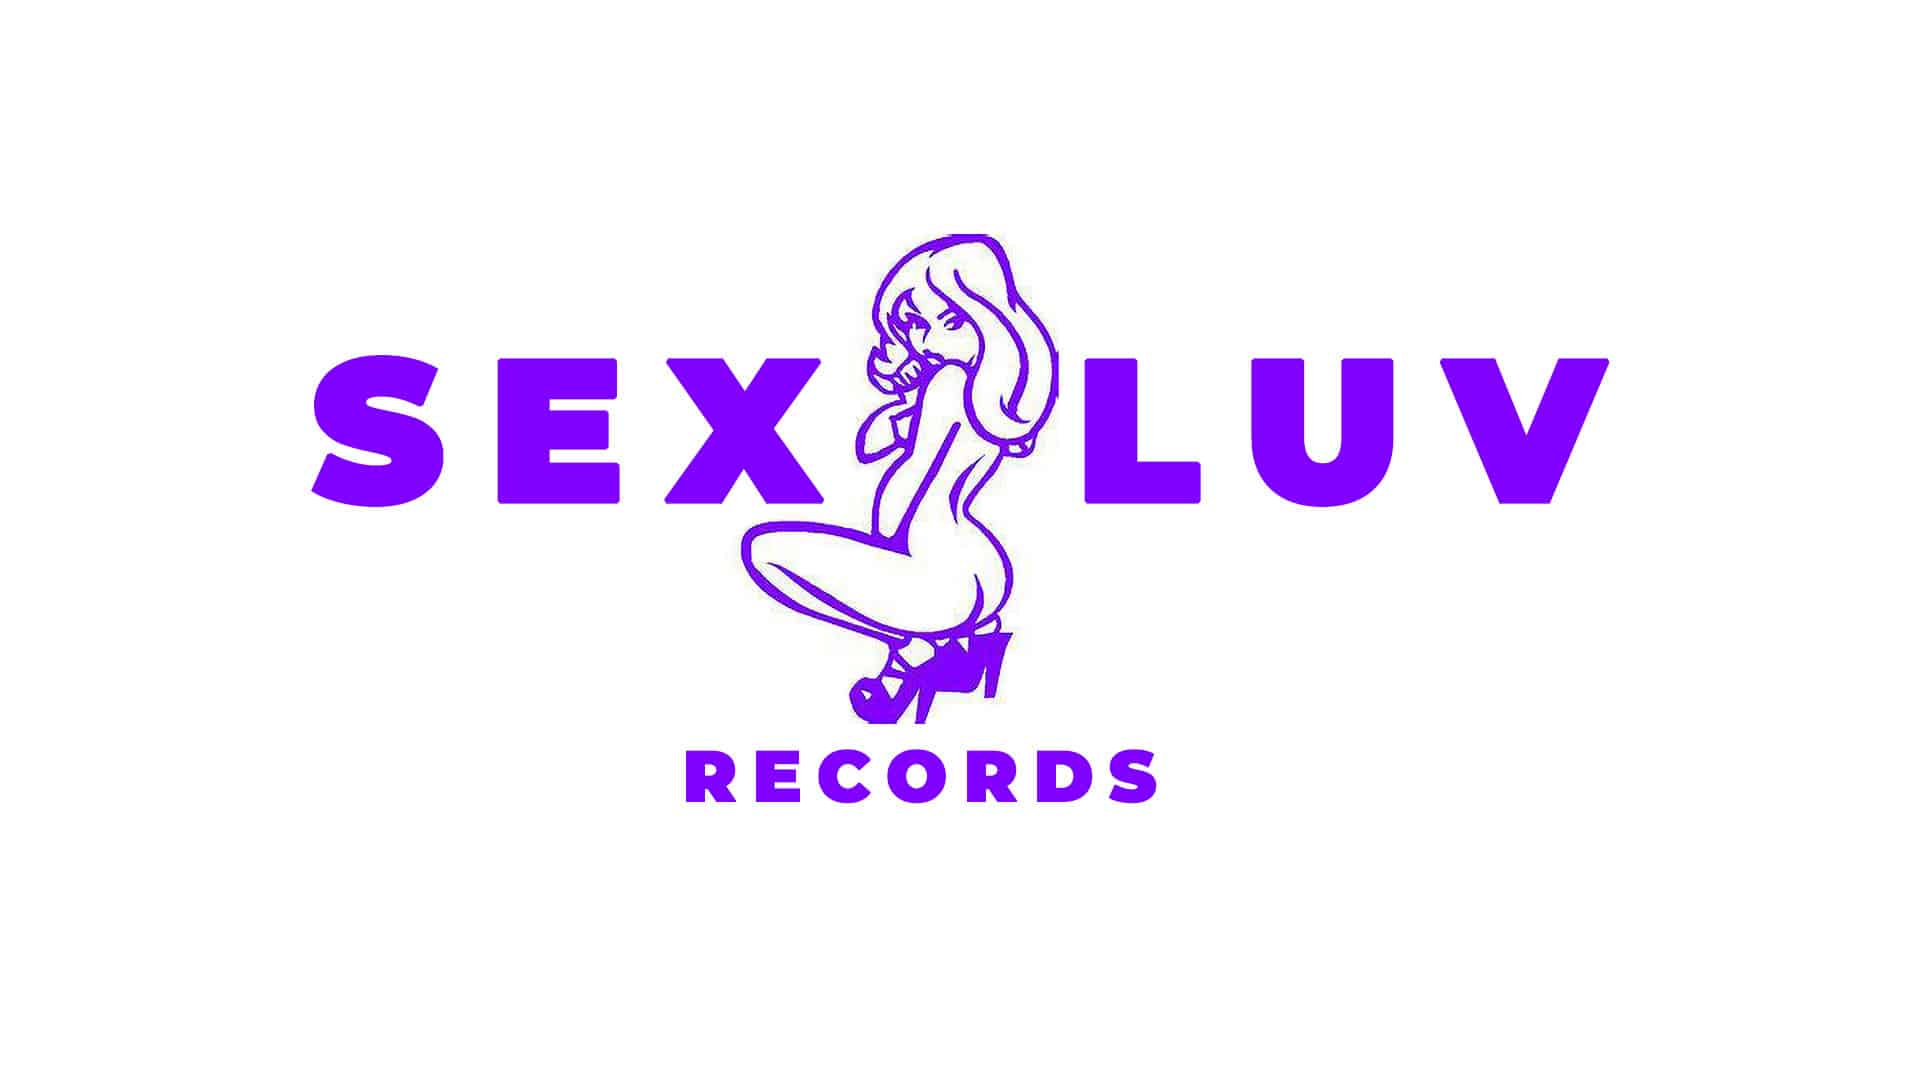 SEX LUV RECORDS